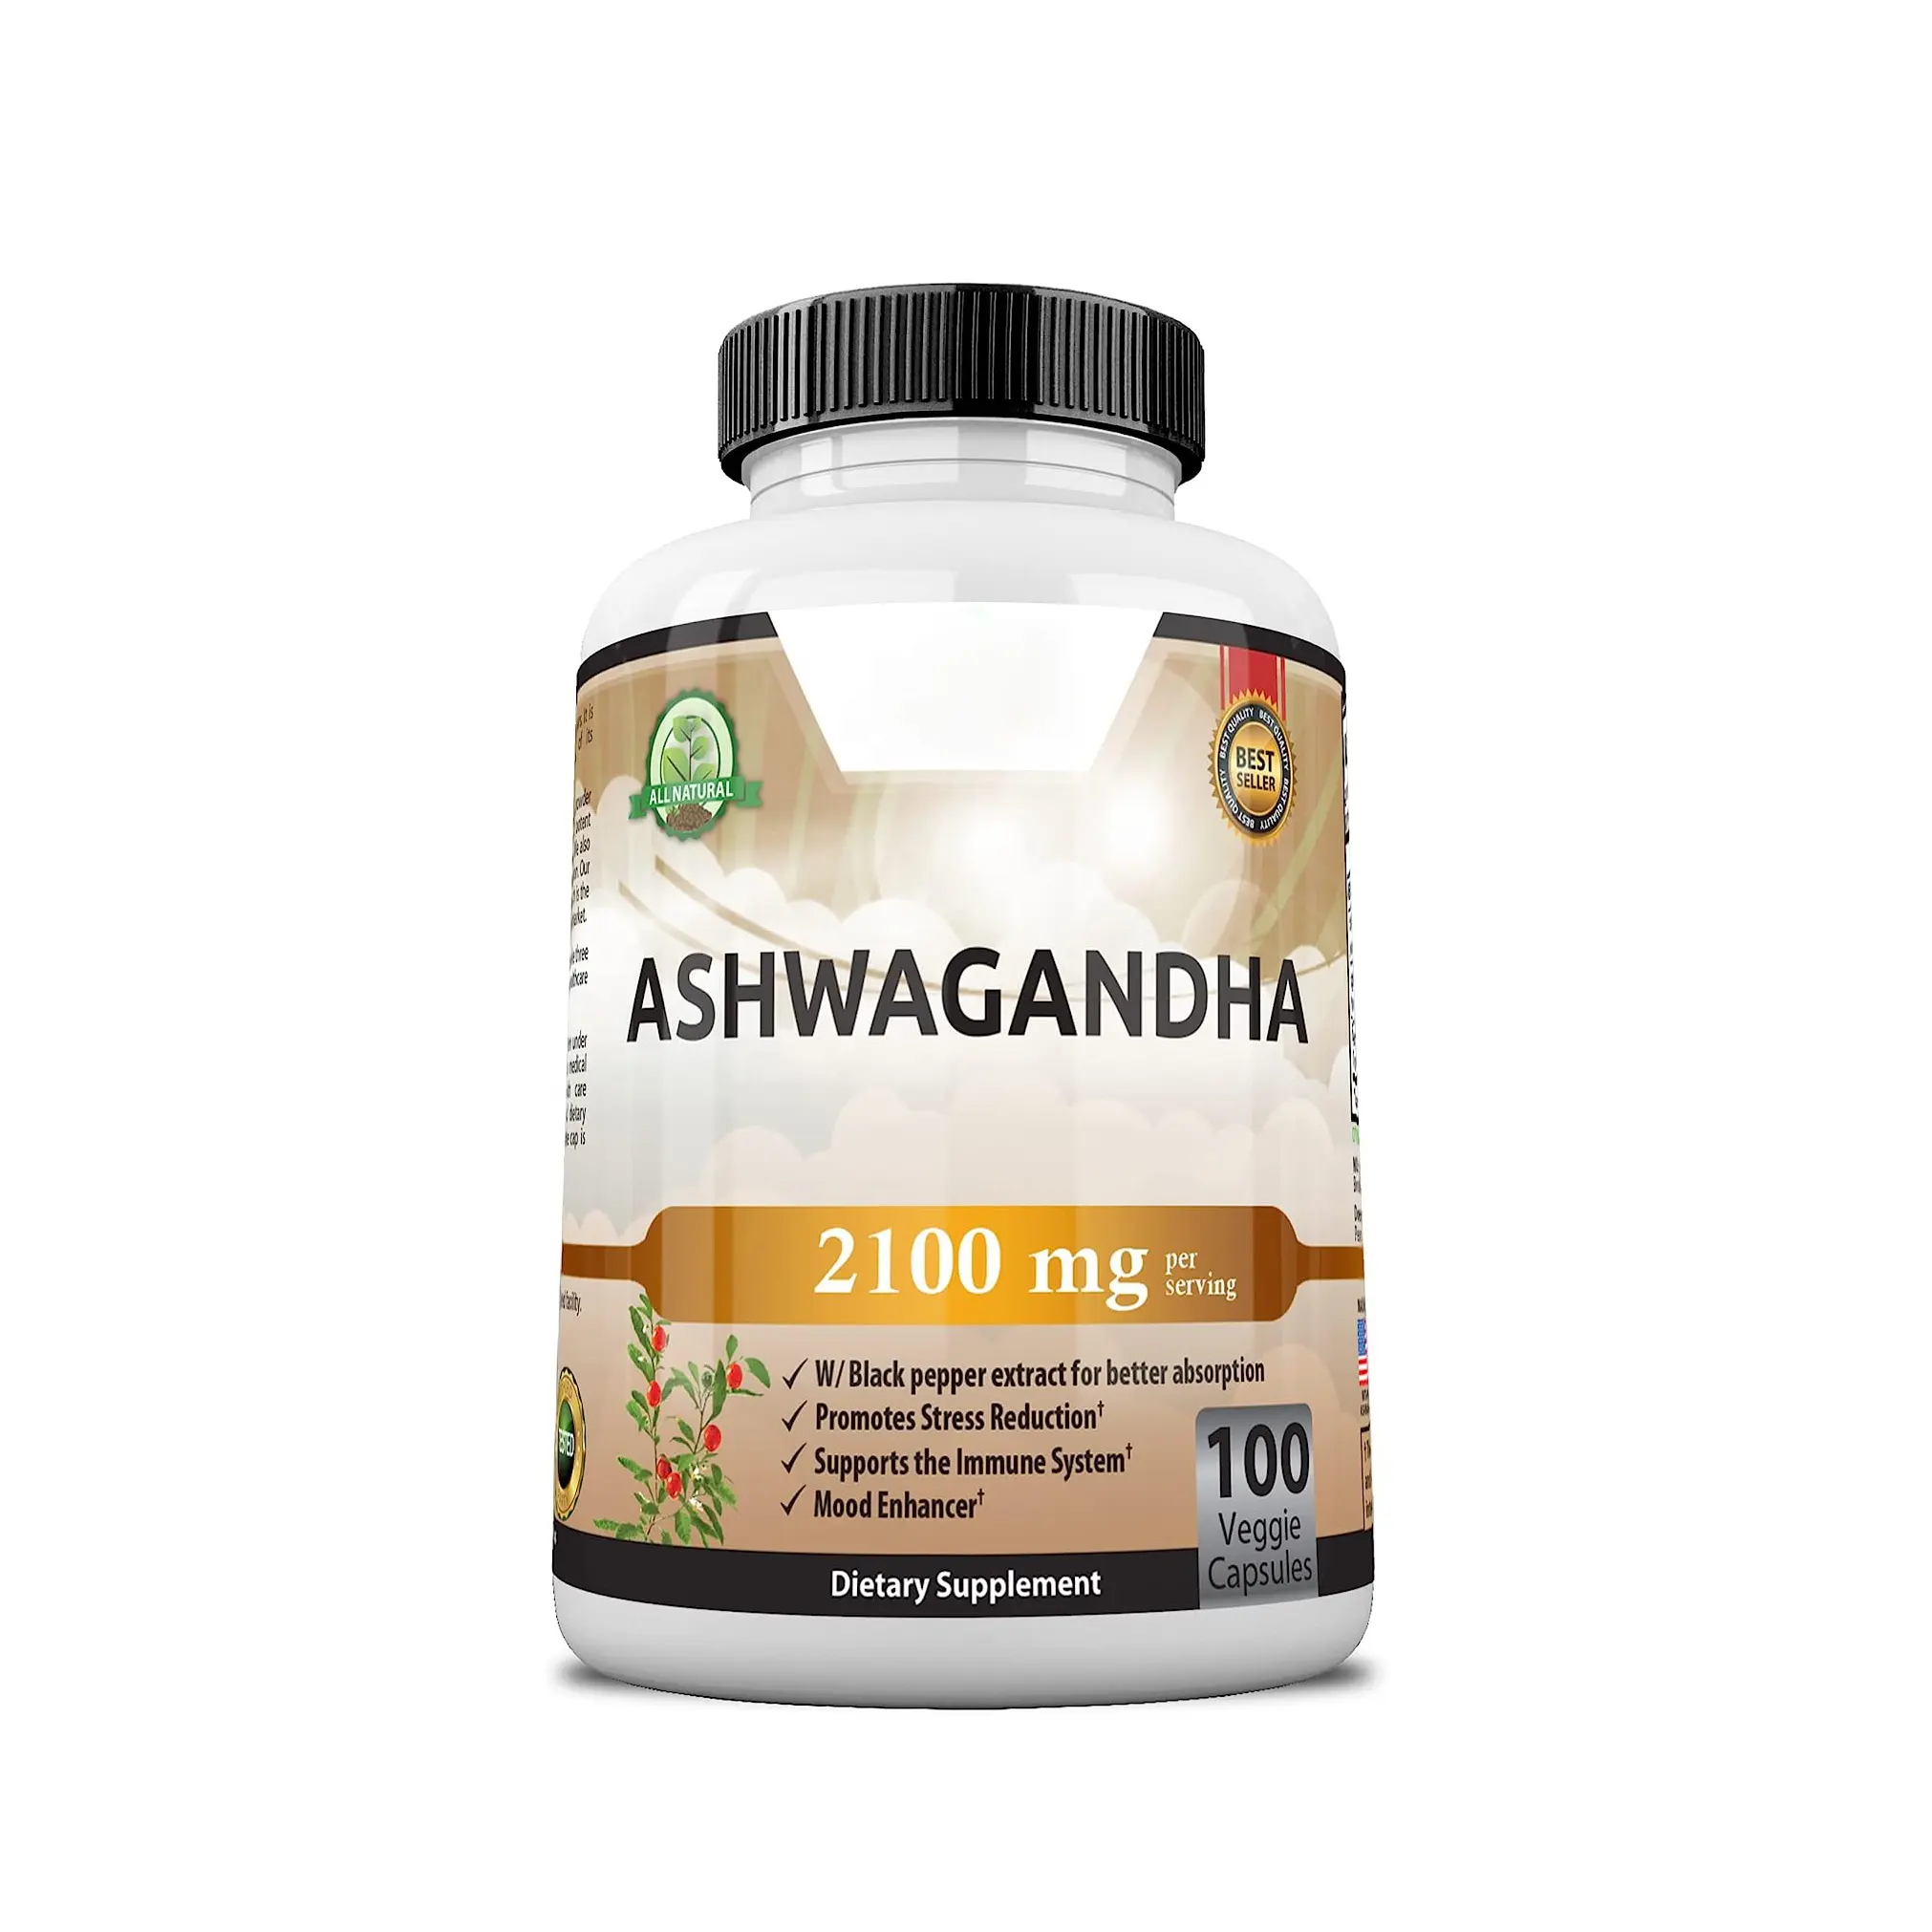 Ashwagandha ksm probiotics black seed oil ashwagandha ksm-66 powder and sea moss capsules 800mg